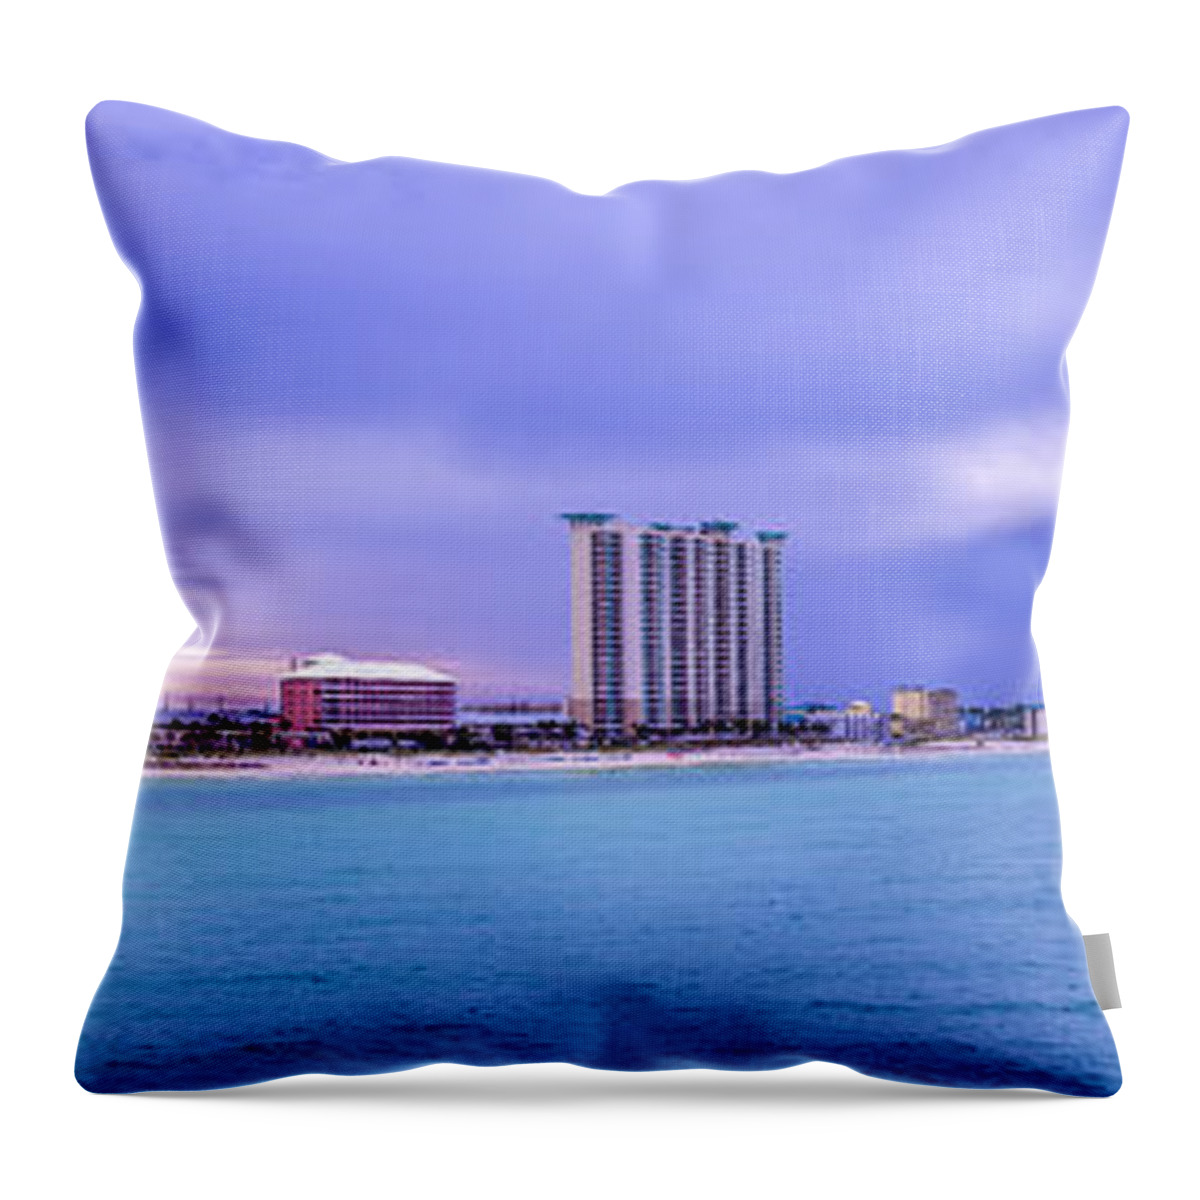 Panama City Beach Throw Pillow featuring the photograph Panama City Beach by David Morefield